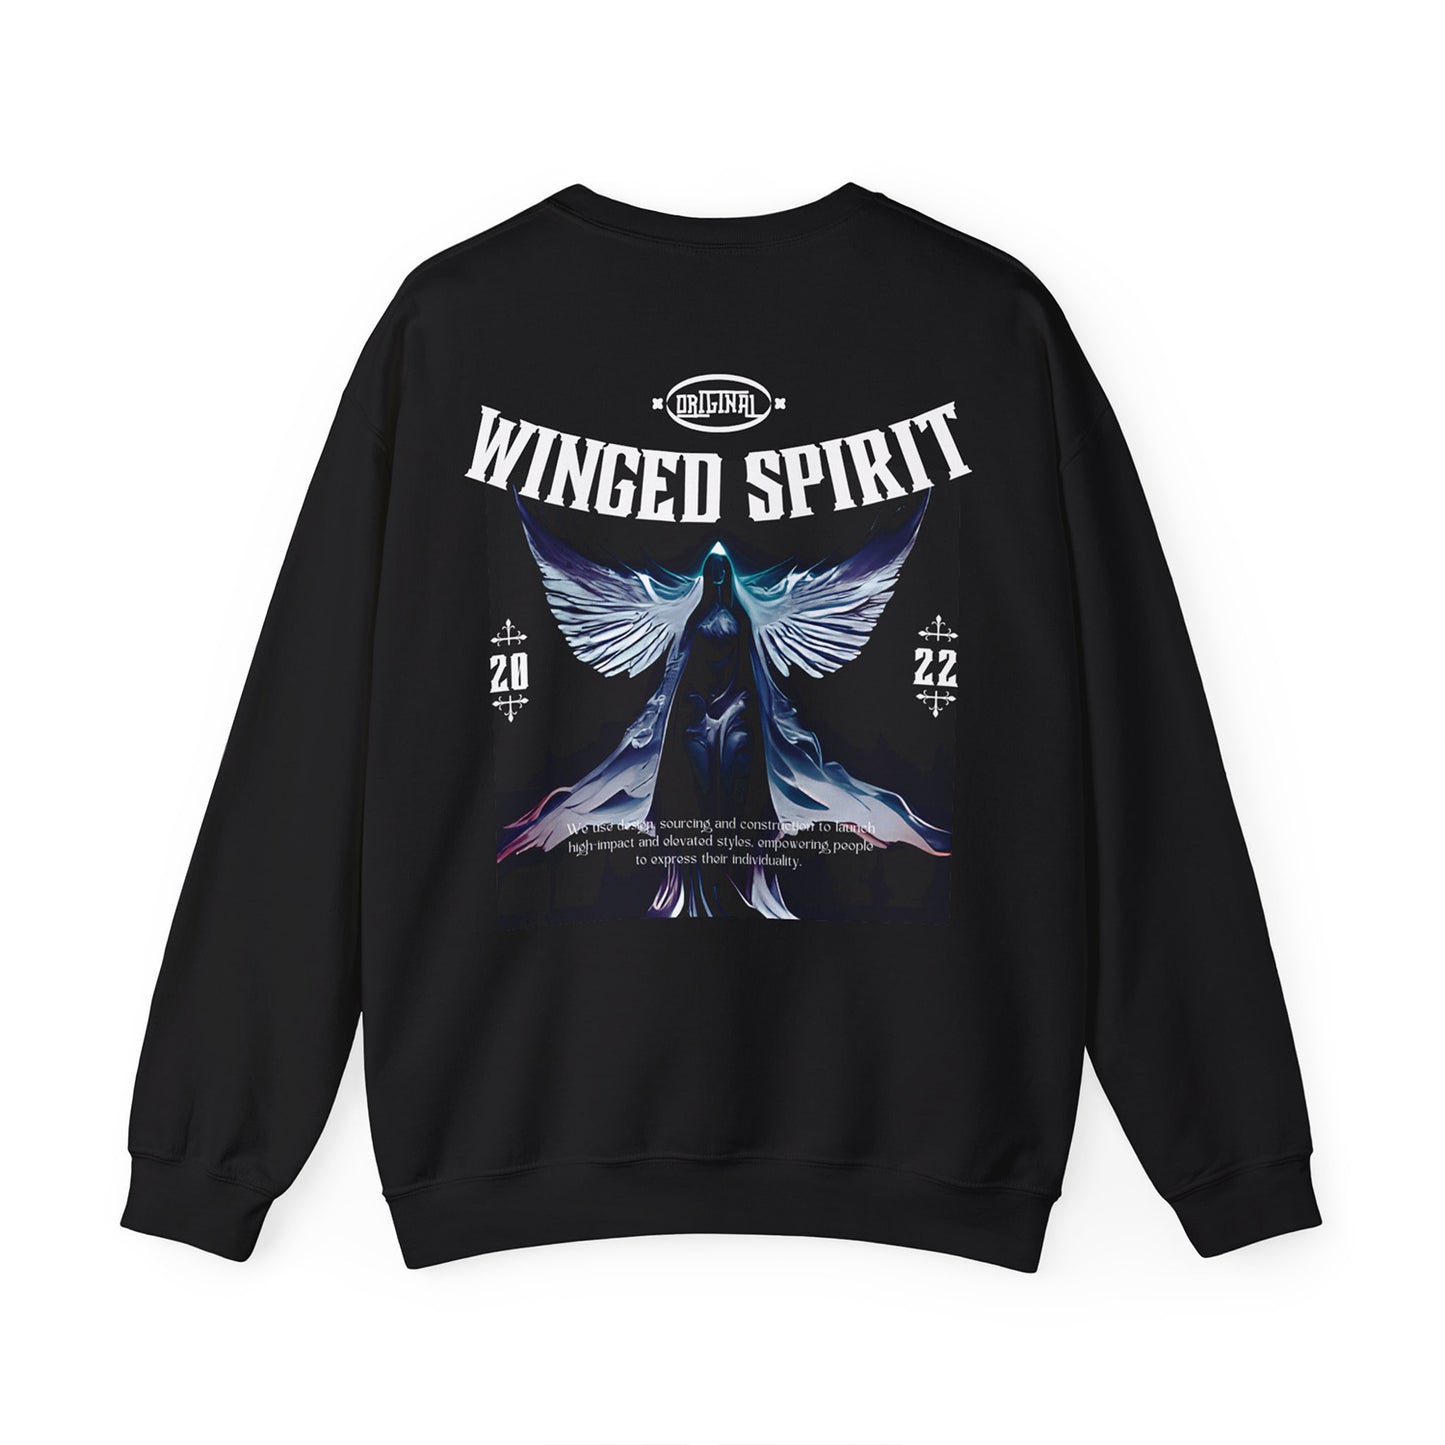 Winged Spirit Sweatshirt for Men